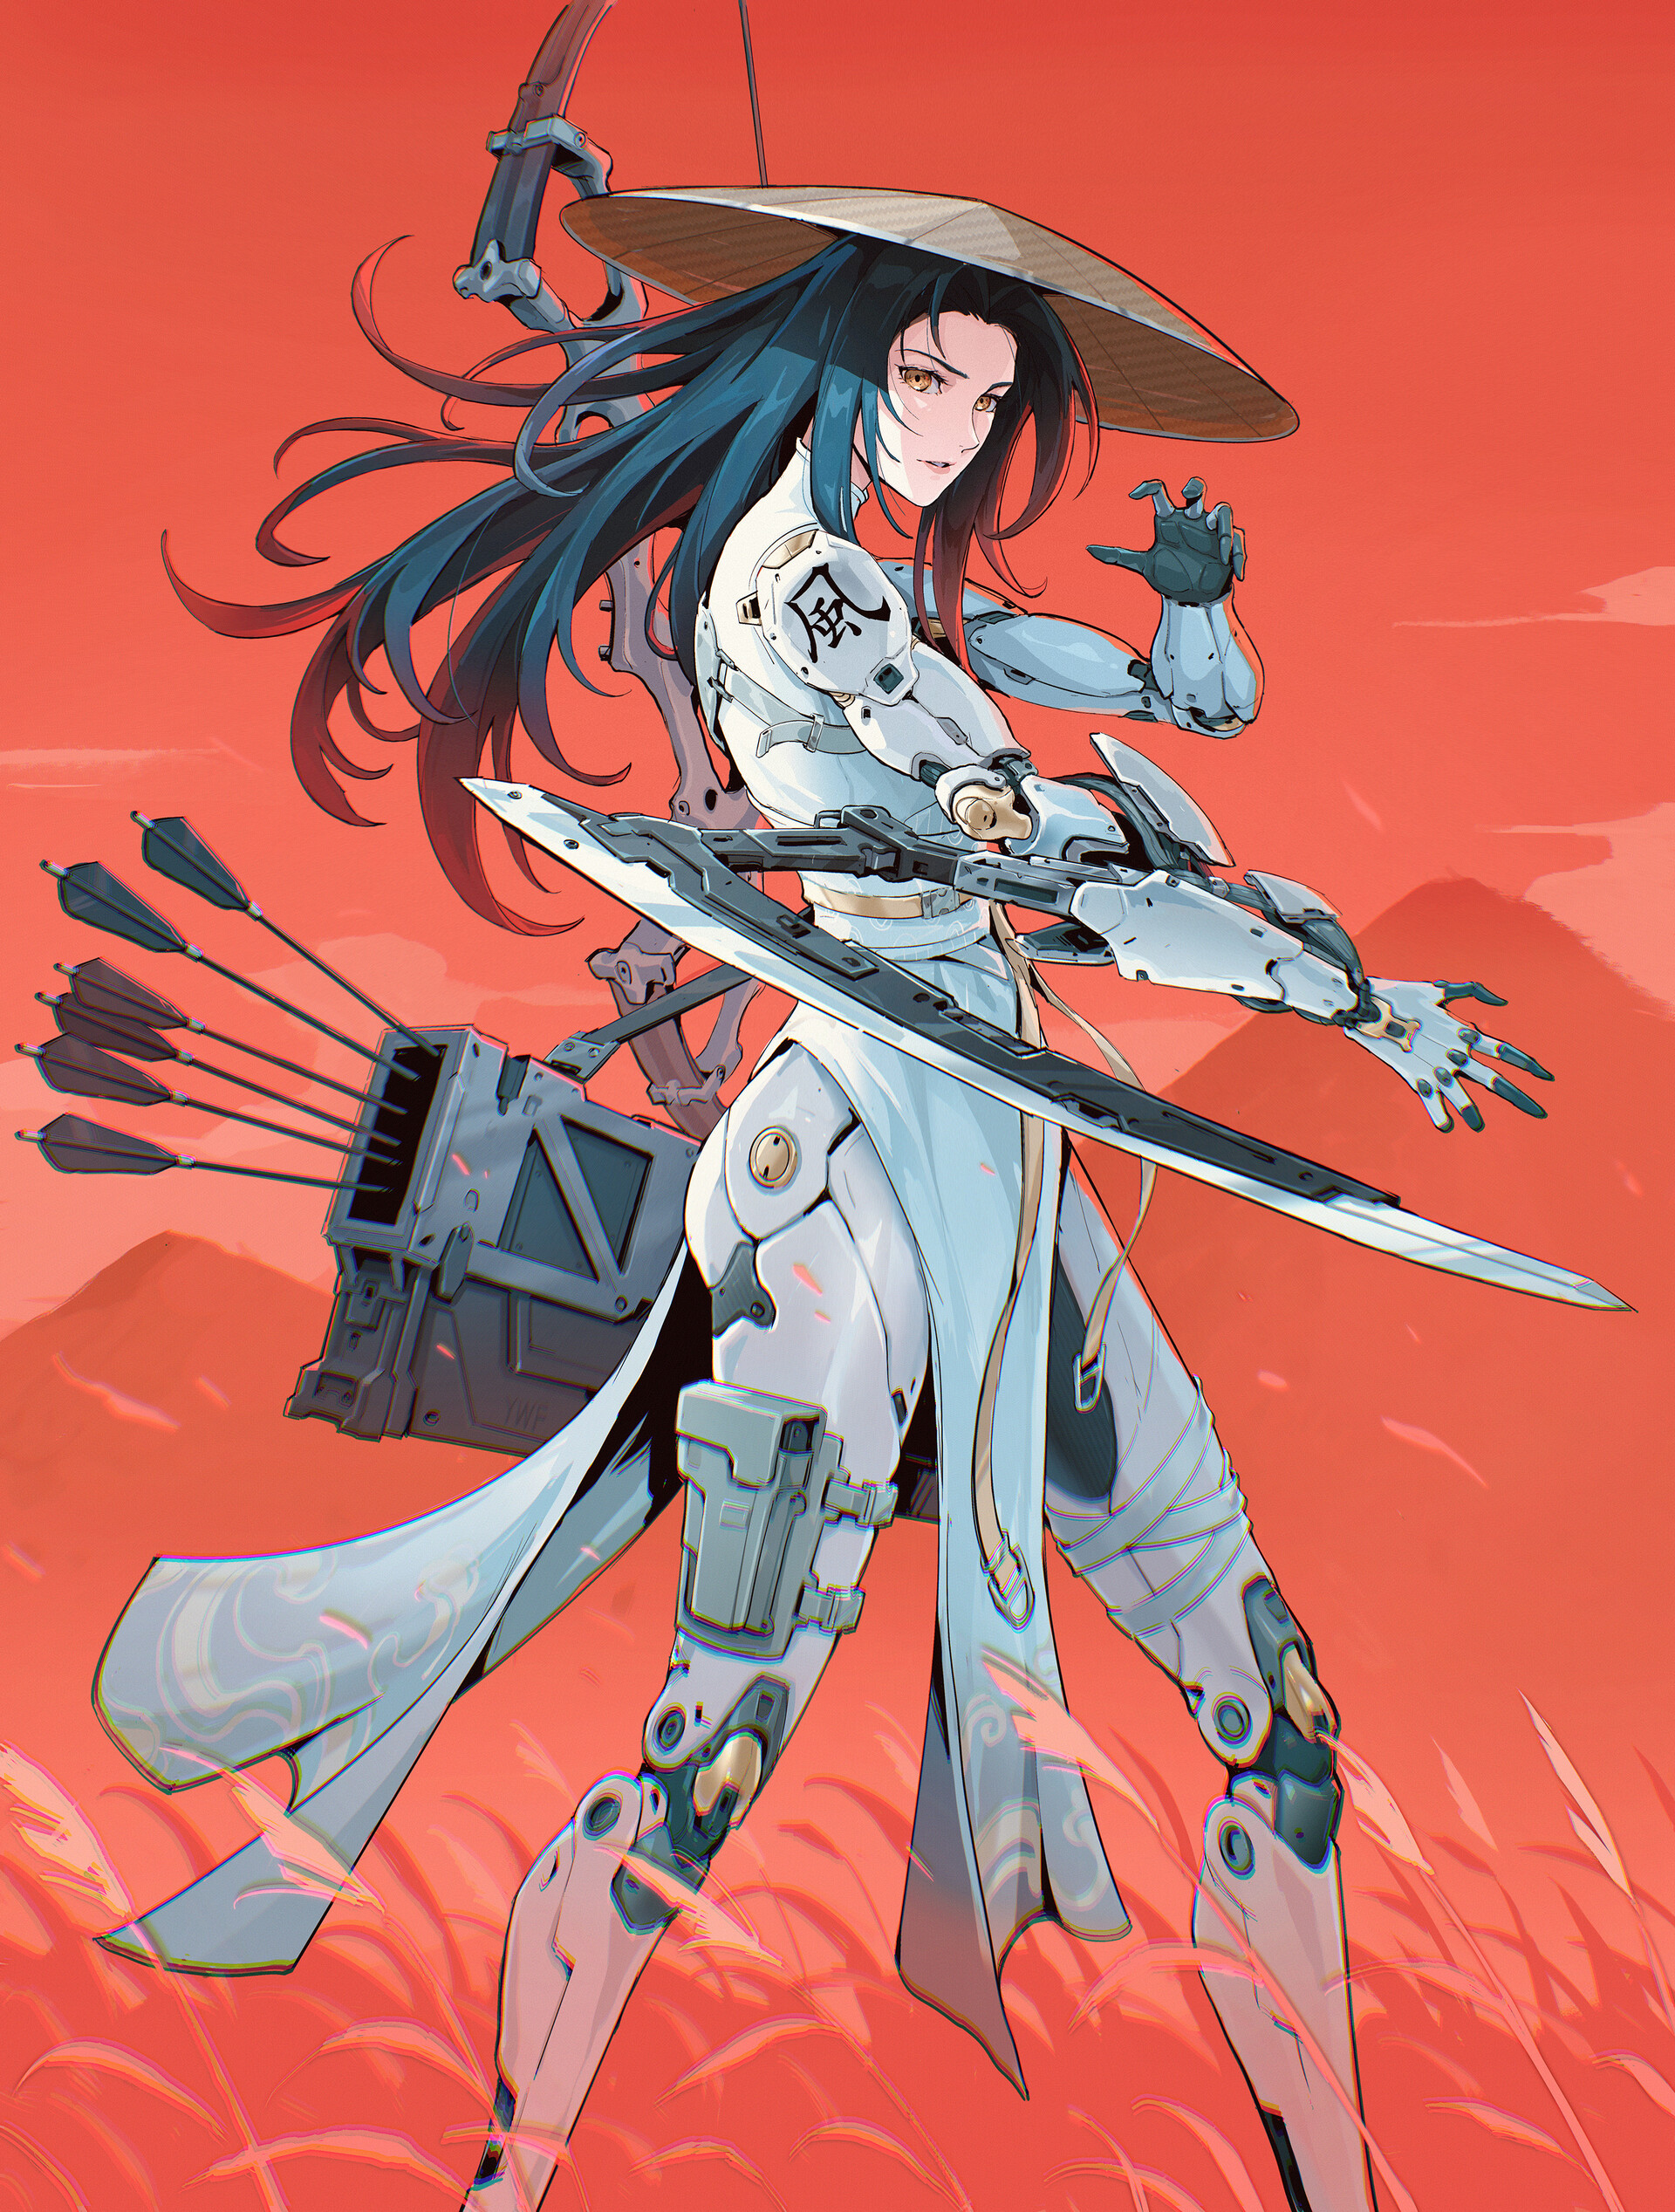 Wenfei Ye Drawing Women Dark Hair Hat Weapon Cyborg Cyberpunk Arrows Futuristic Bow Grass Orange Man 1920x2535